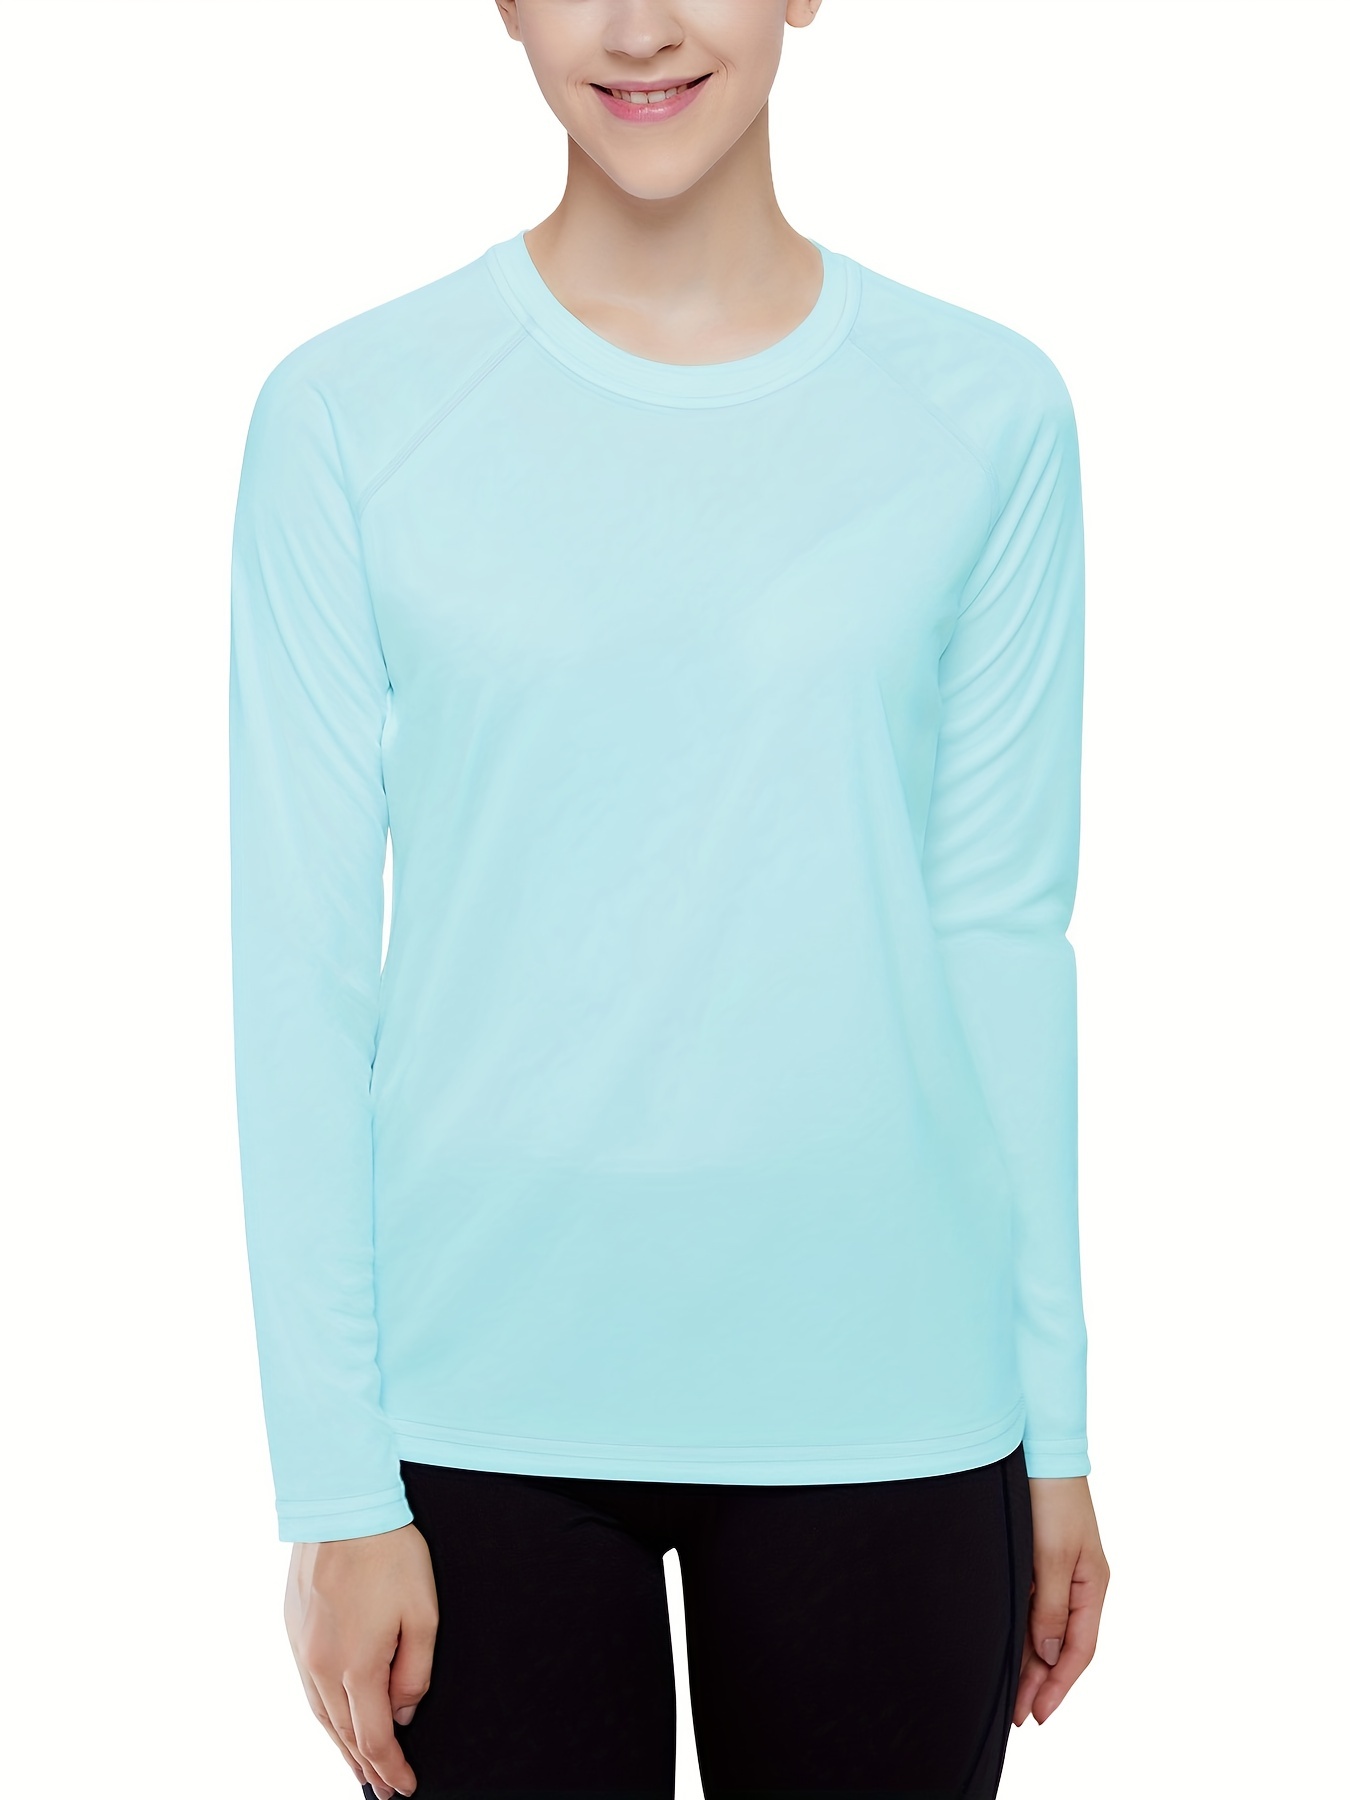  Womens UPF 50+ Sun Protection Hoodie Shirt Long Sleeve  Fishing Hiking Outdoor UV Shirt Lightweight Blue XS